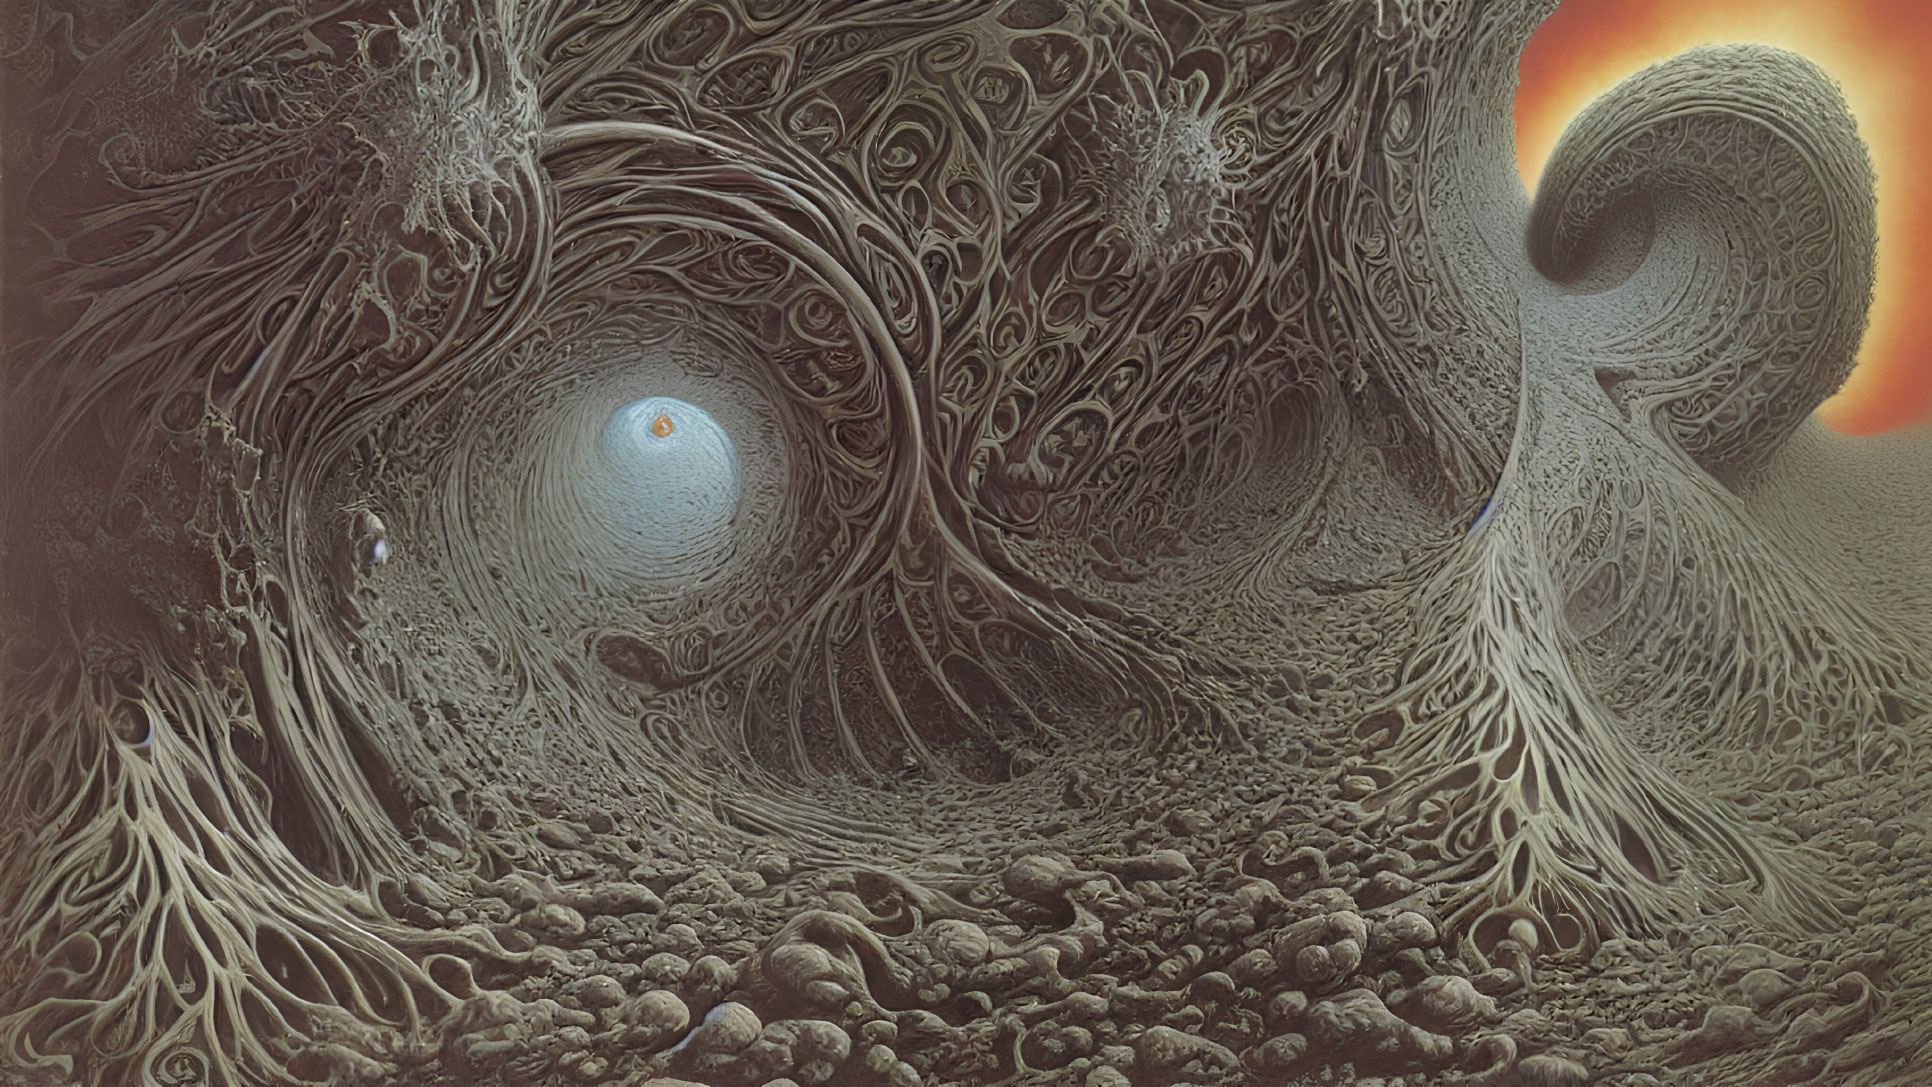 Intricate surrealistic artwork: swirling vortex, eye-like structures, textured patterns.